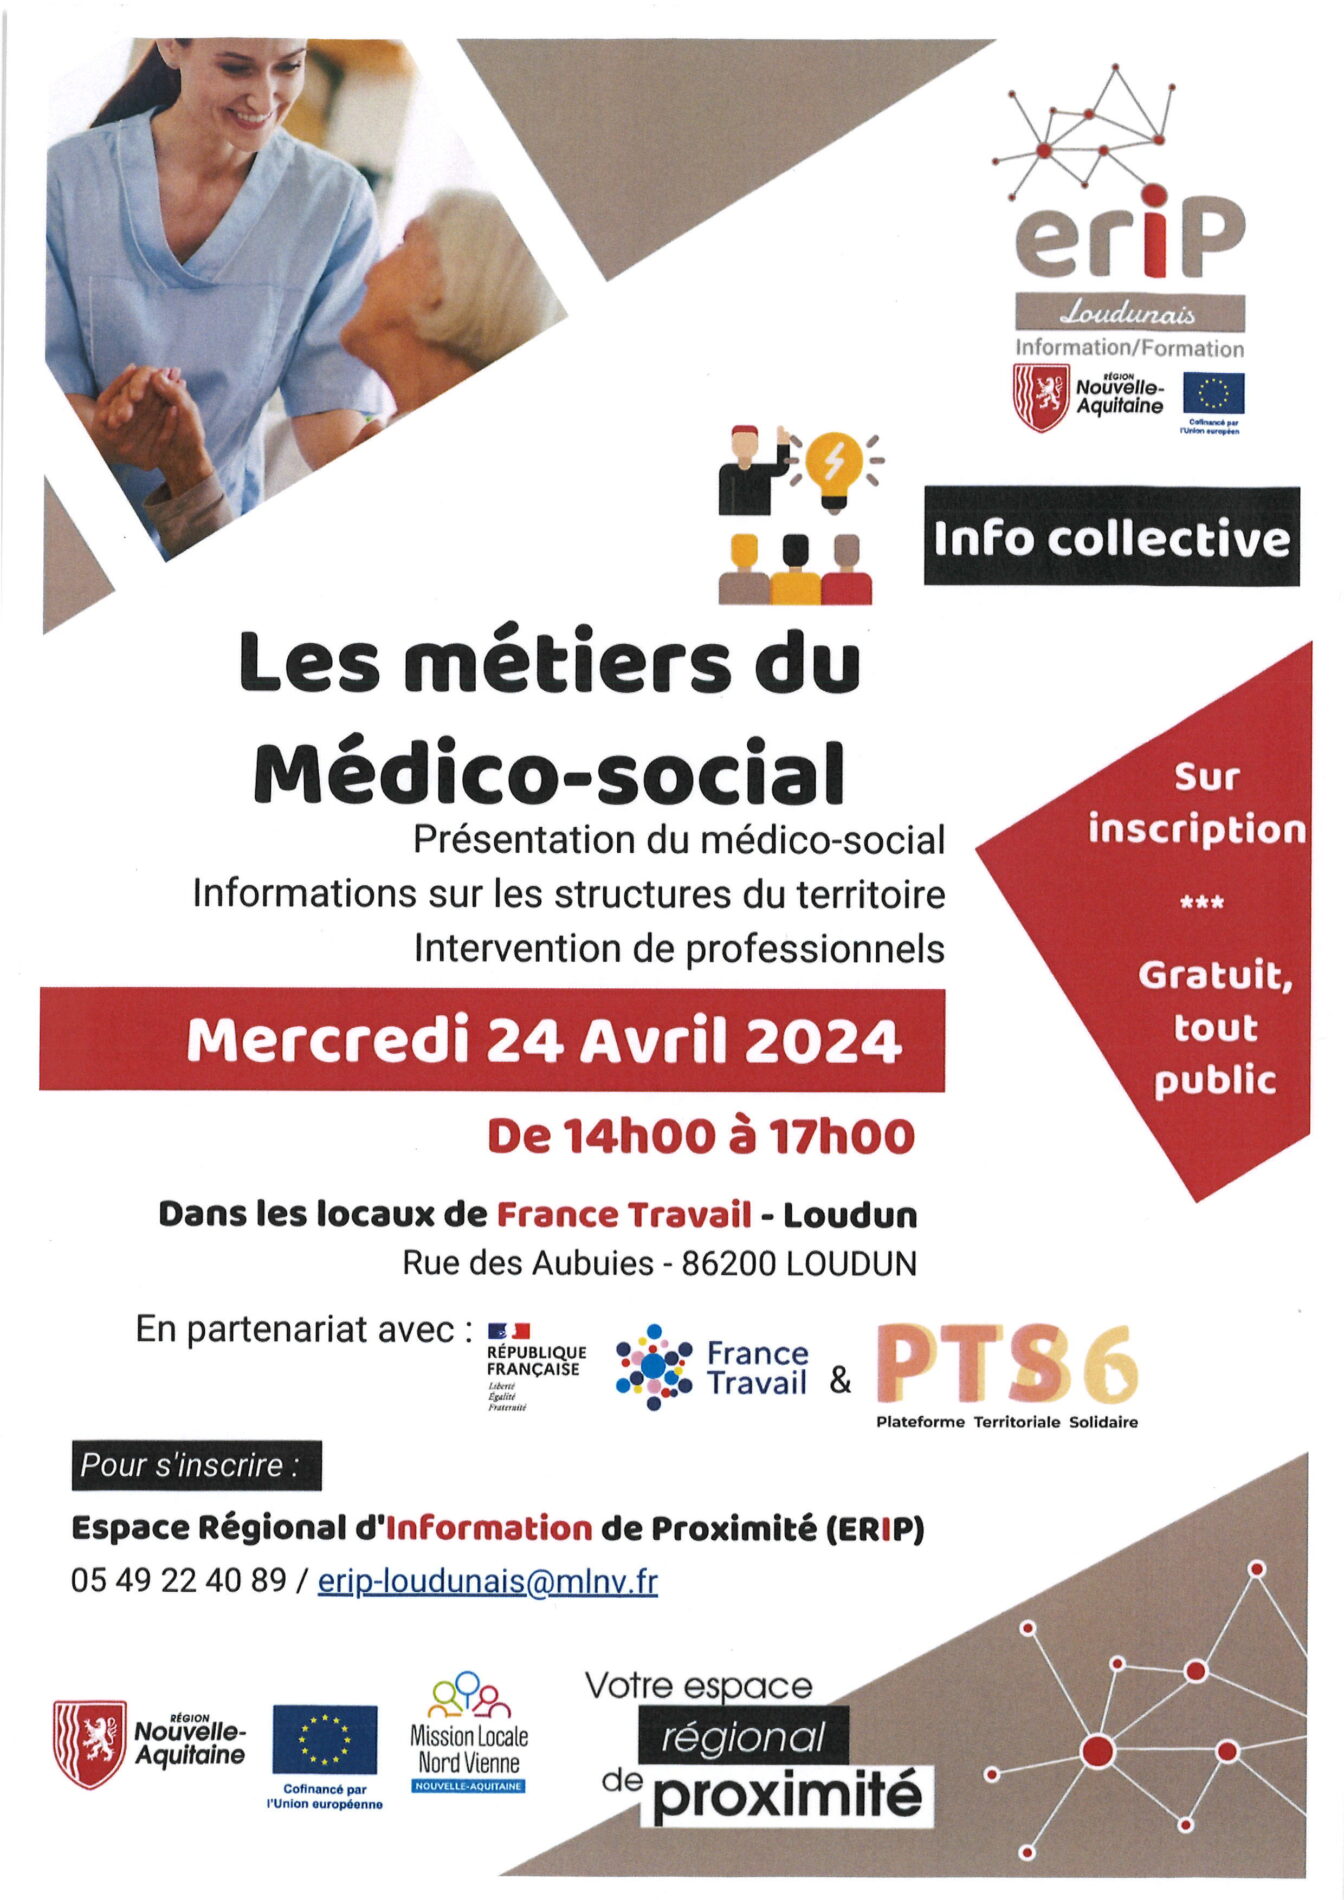 You are currently viewing Les métiers du médico-social